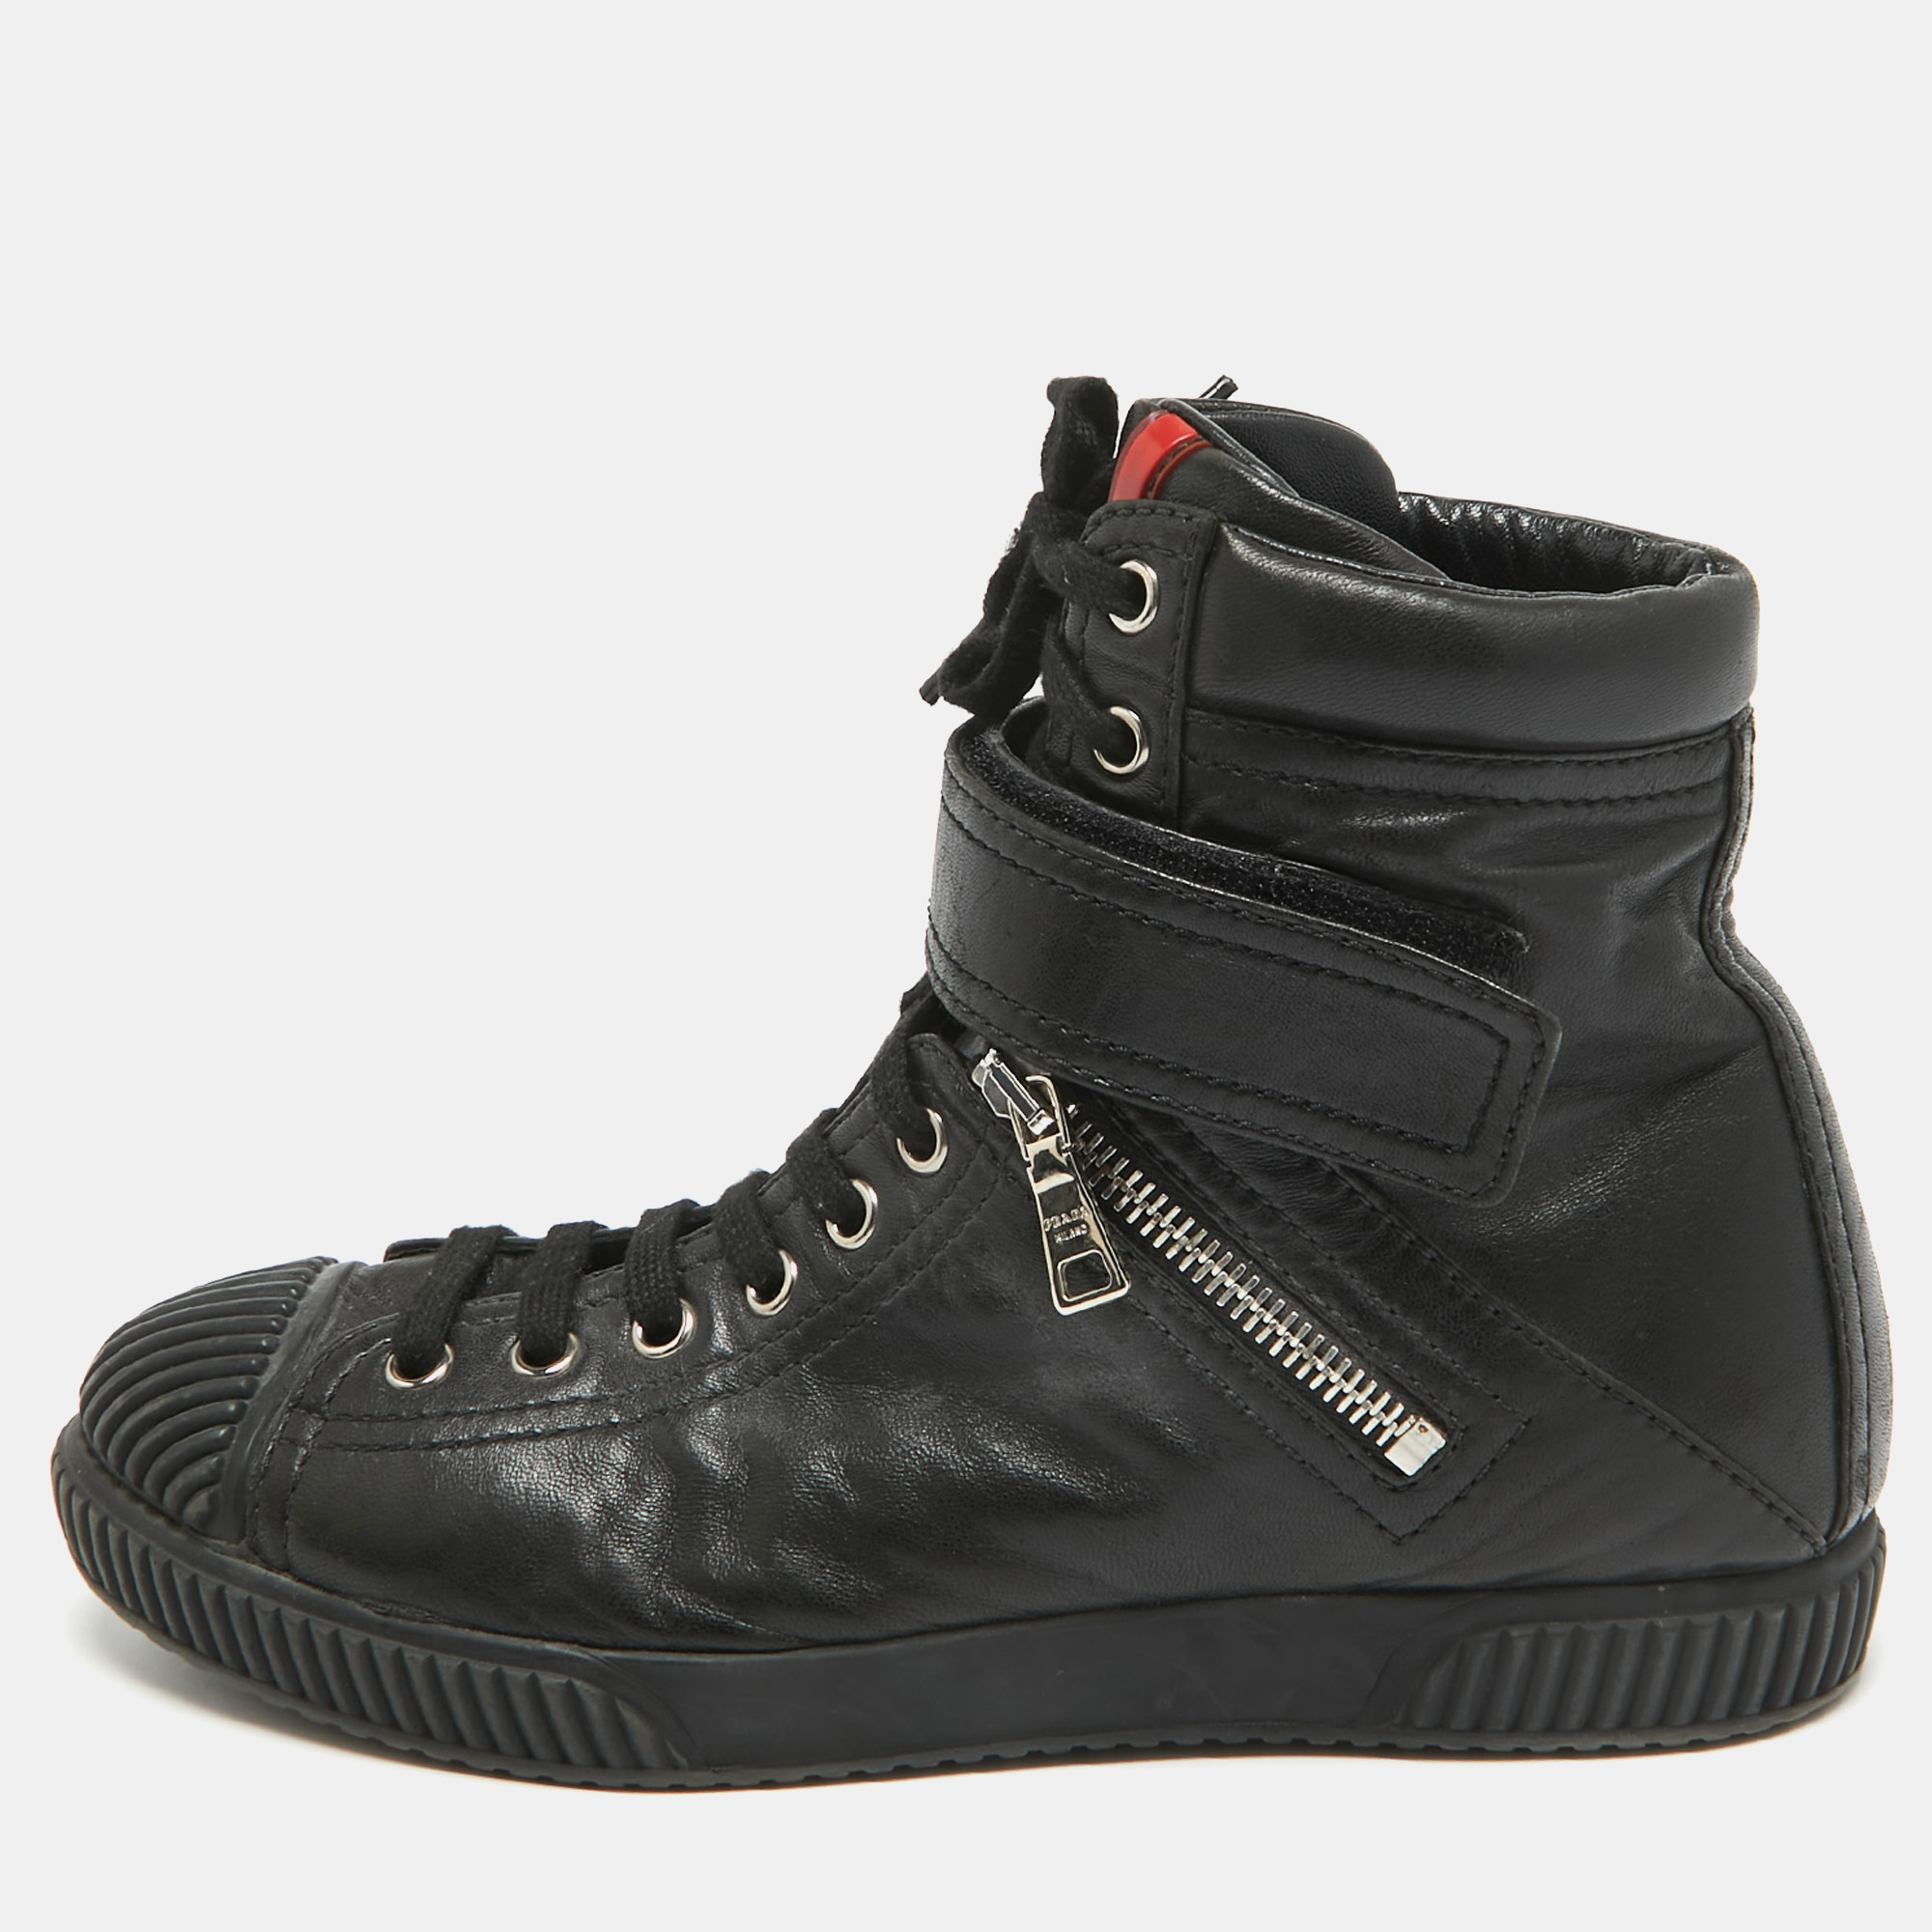 Prada Sport Black Leather High Top Sneakers Size 36.5